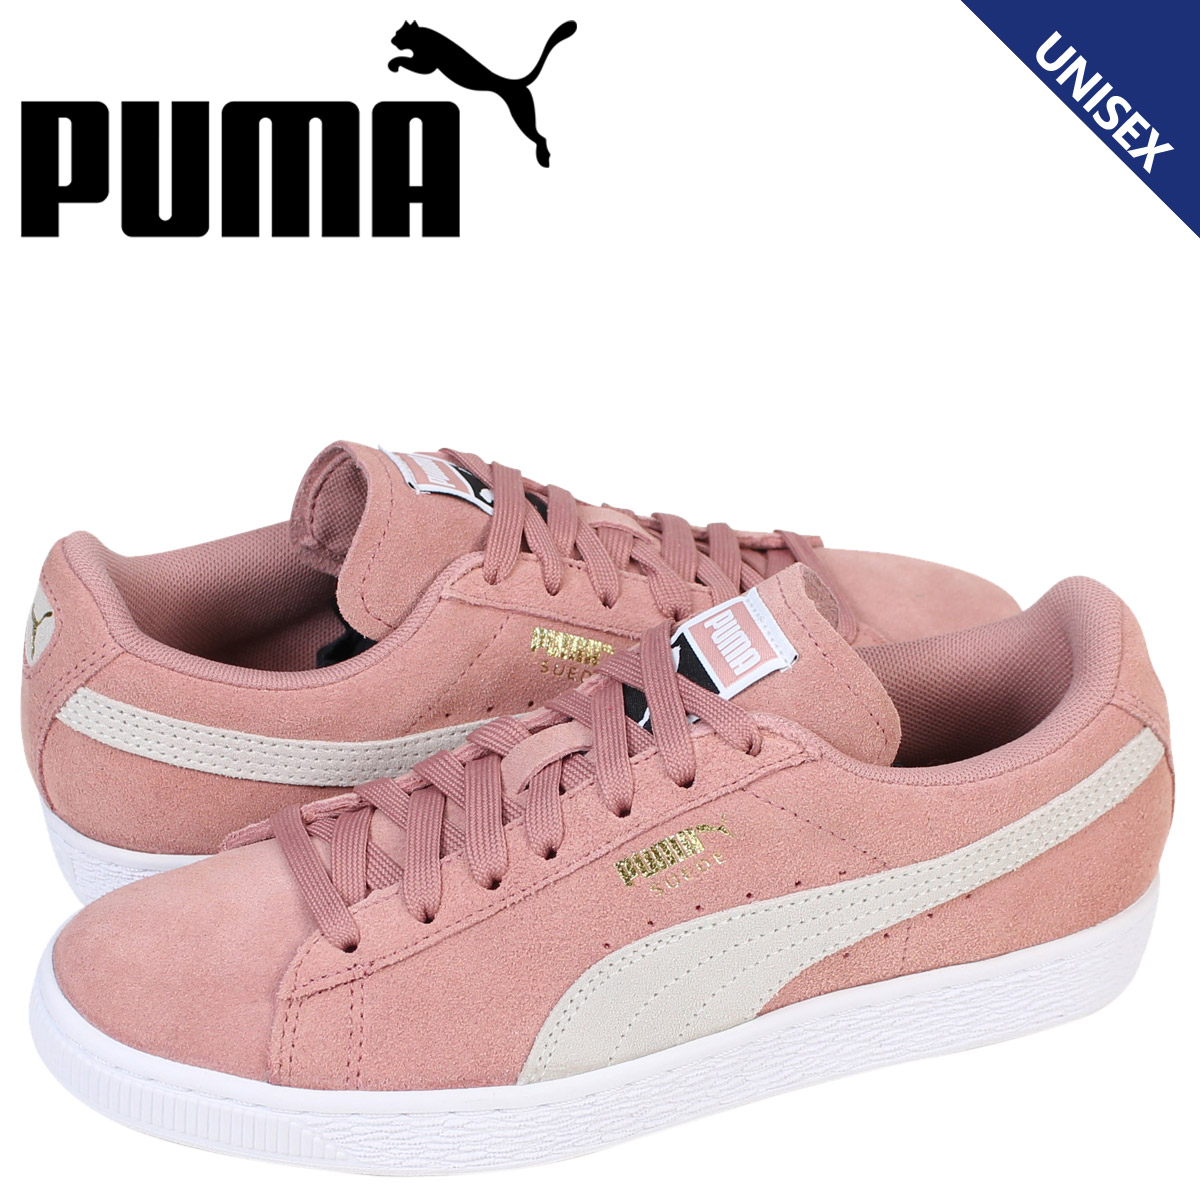 puma classic pink